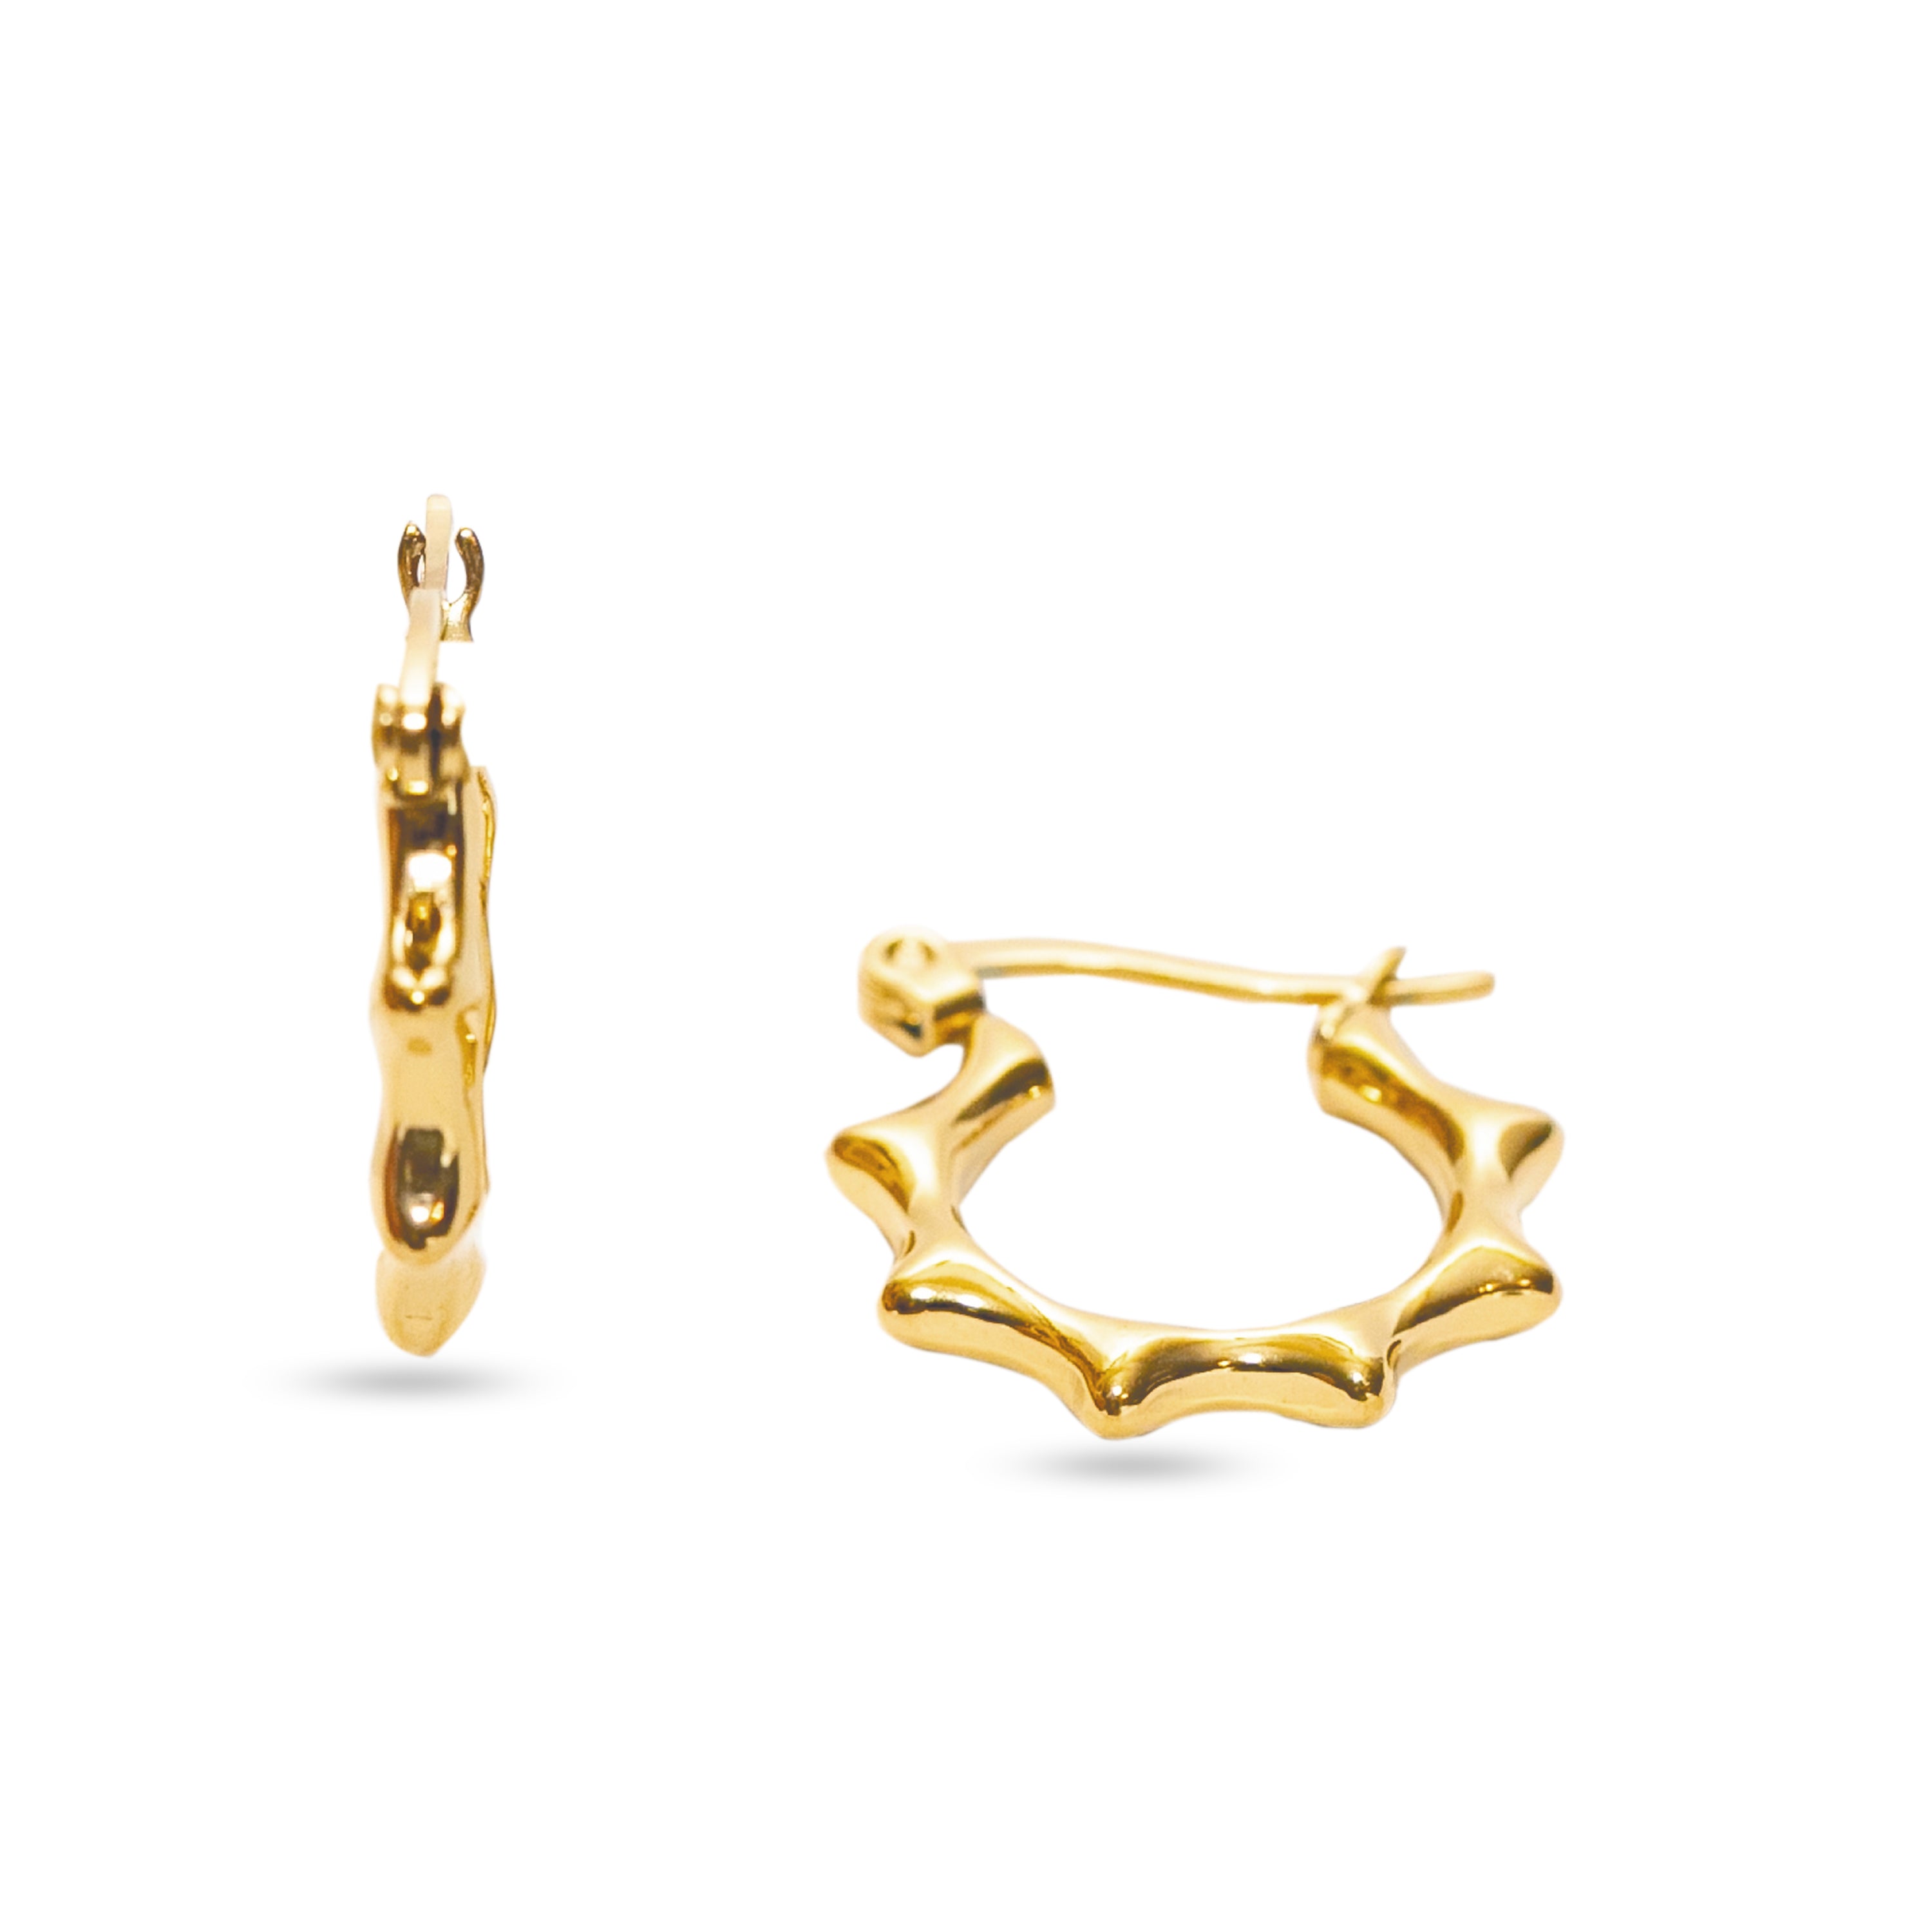 Stainless Steel Gold Tone Fancy Hoop Earrings